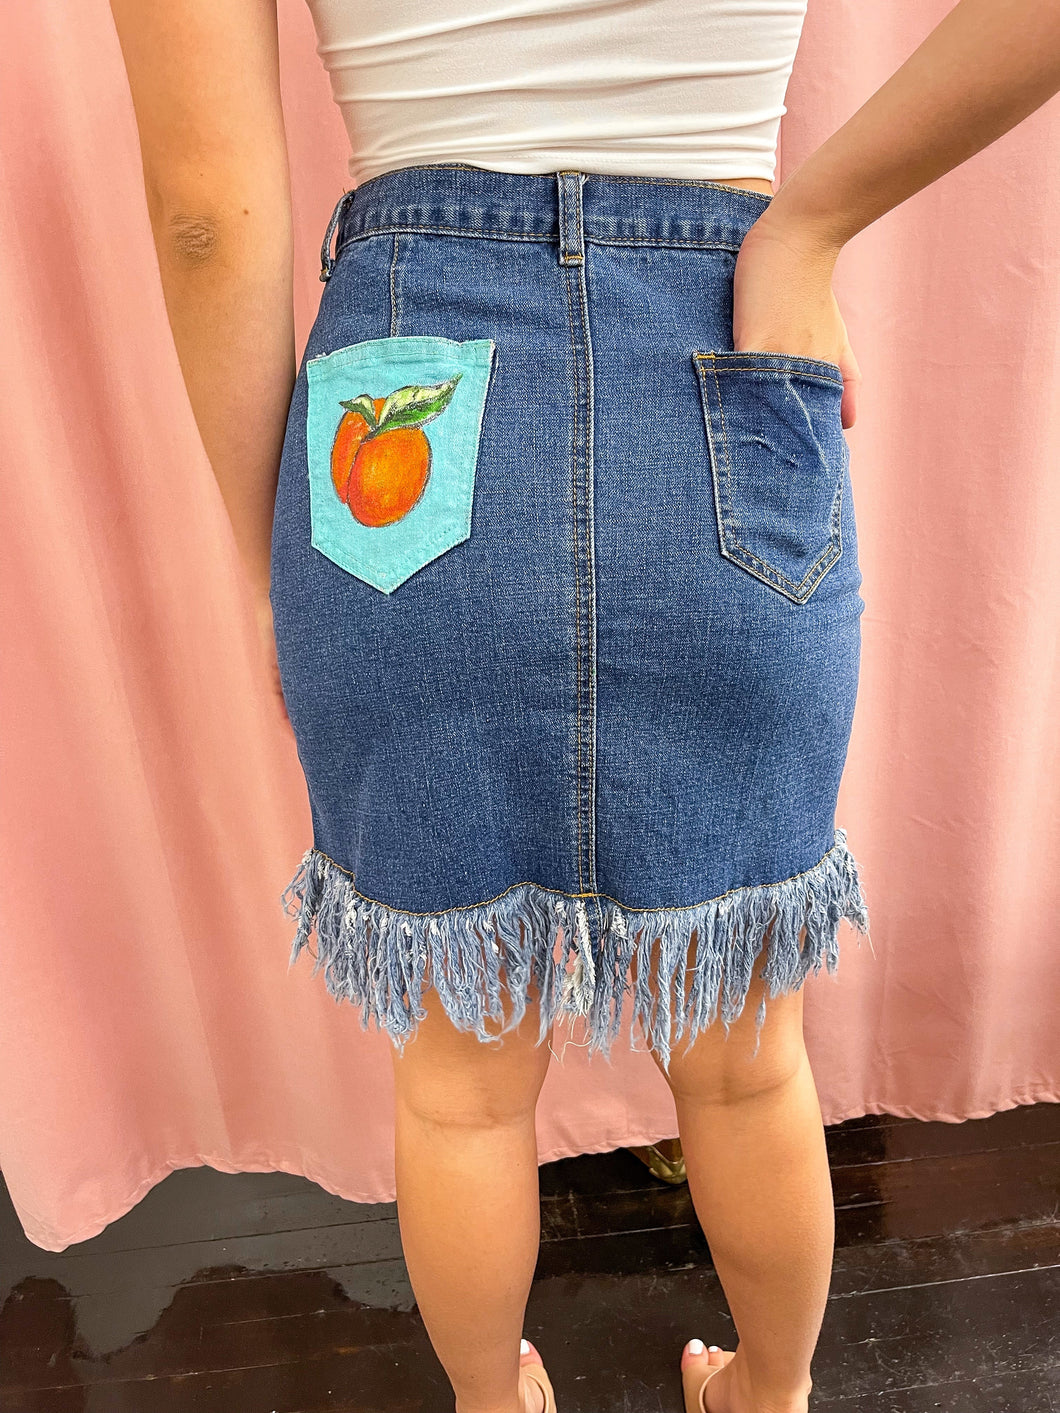 Isabelle Renee Art x GB- Blue Peach Skirt